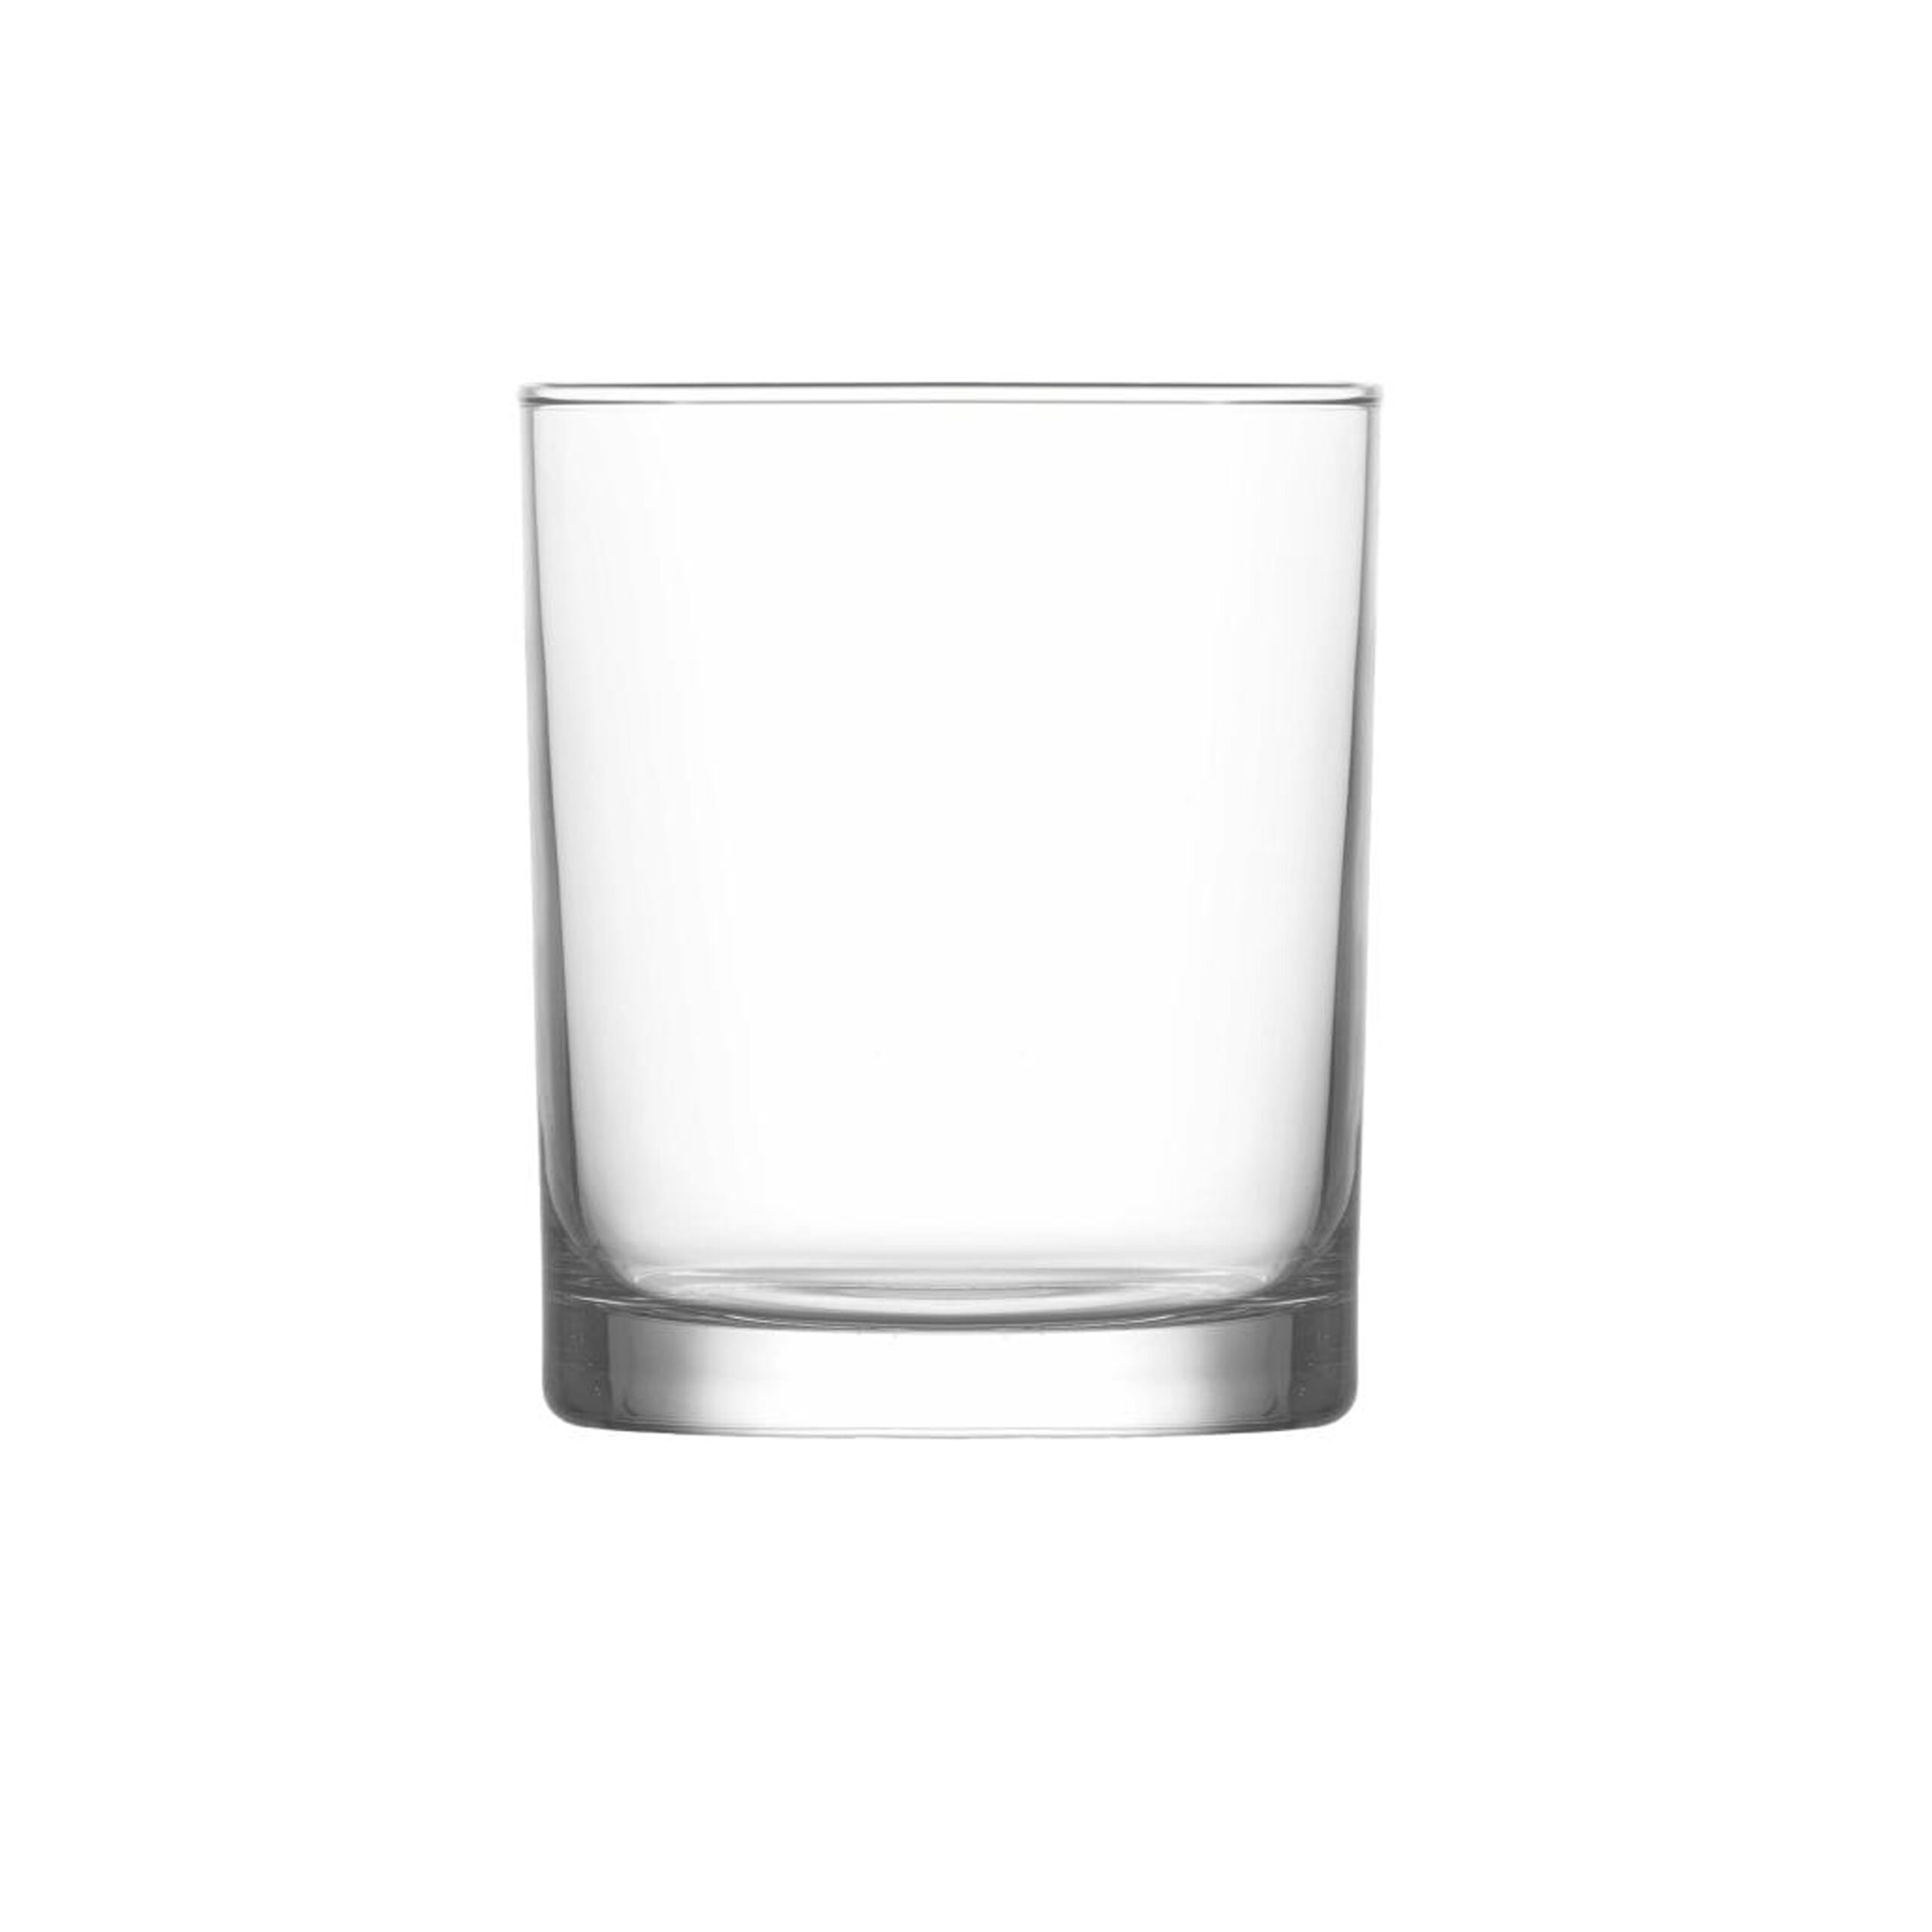 NICE ONE GLASS
TUMBLER
WHISKEY 320ml
(1x6)